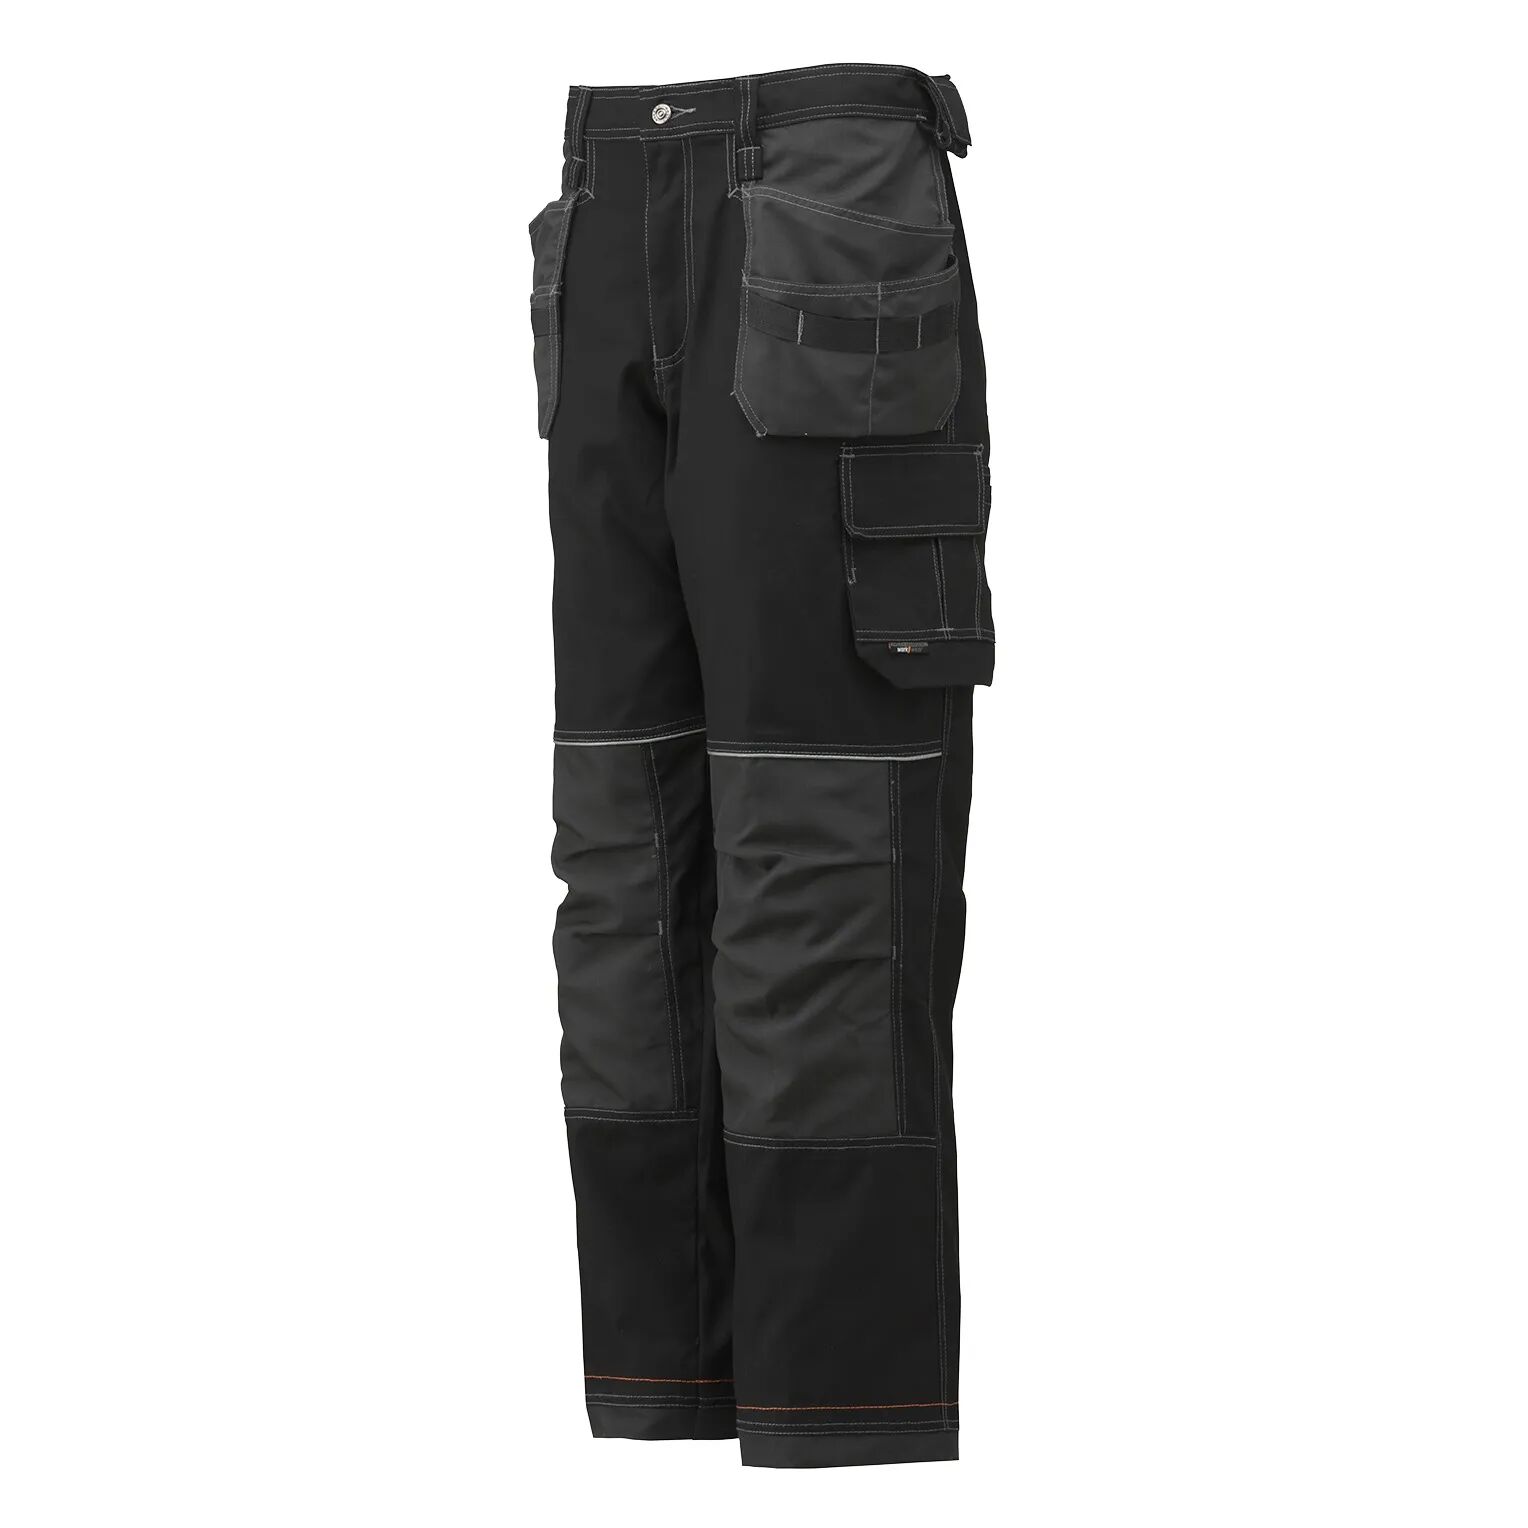 HH Workwear Helly Hansen WorkwearChelsea Durable Reflective Construction Pants Black 34/36